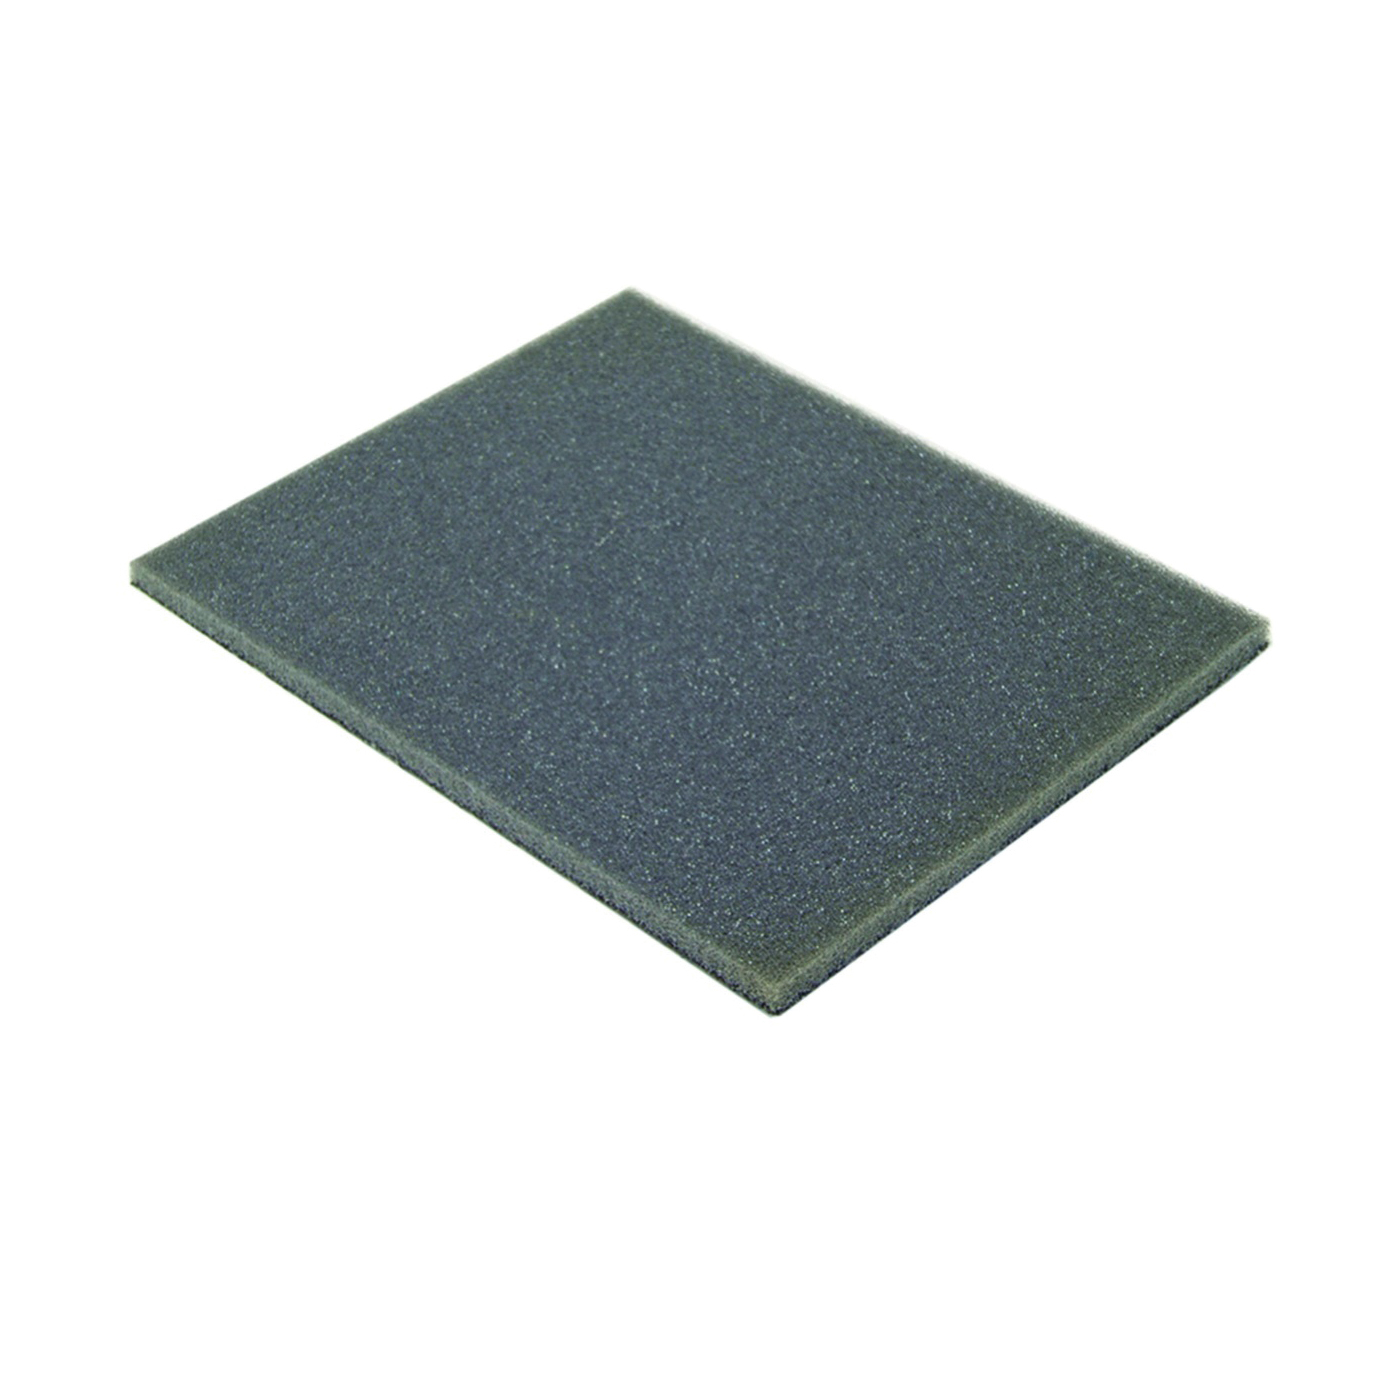 Norton MultiSand 00937 Sanding Sponge, 5-1/2 in L, 4-1/2 in W, Extra Fine, Aluminum Oxide Abrasive